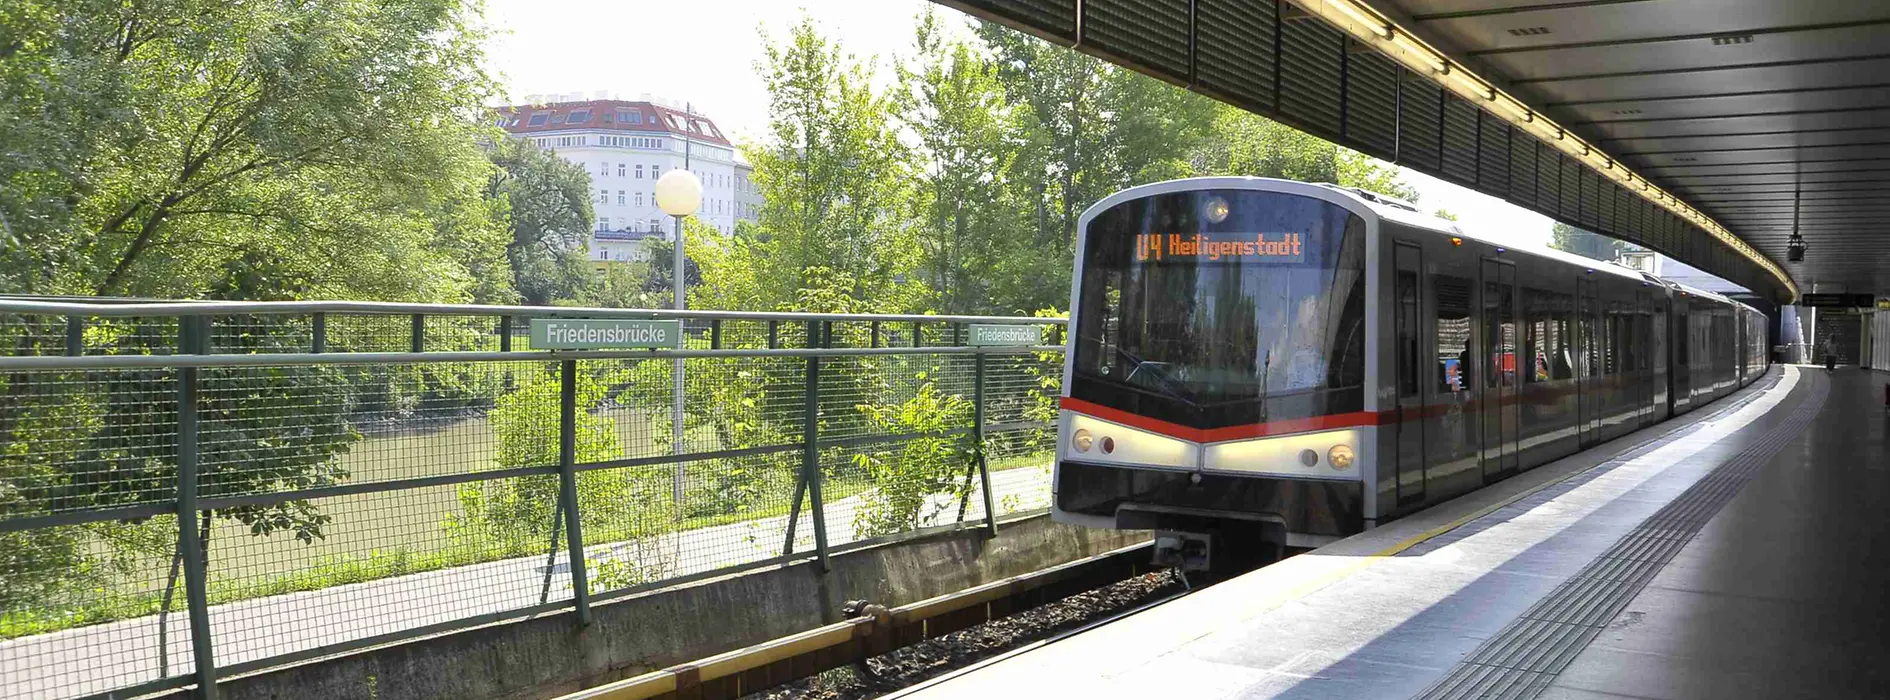 Станция метро «Friedensbrücke»